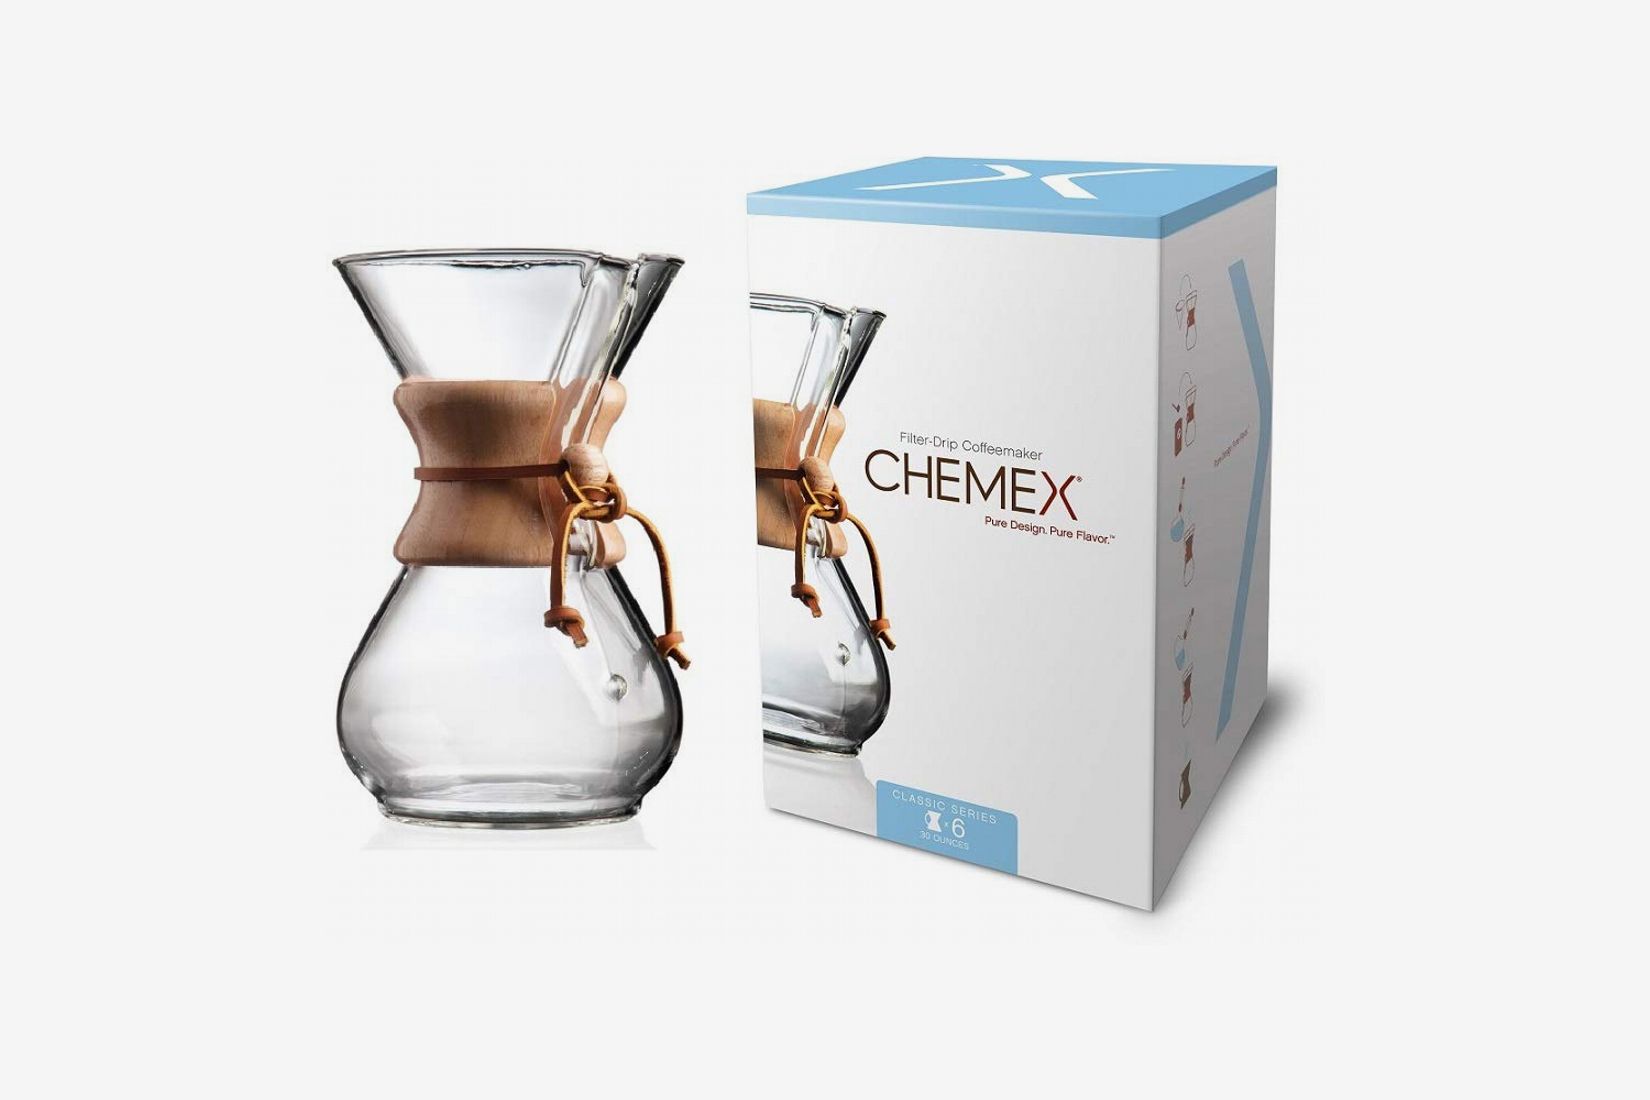 https://pyxis.nymag.com/v1/imgs/5fd/968/2dd636efdb8fc616cfef1a12ec72c1bbf8-chemex-with-box-coffee.jpg